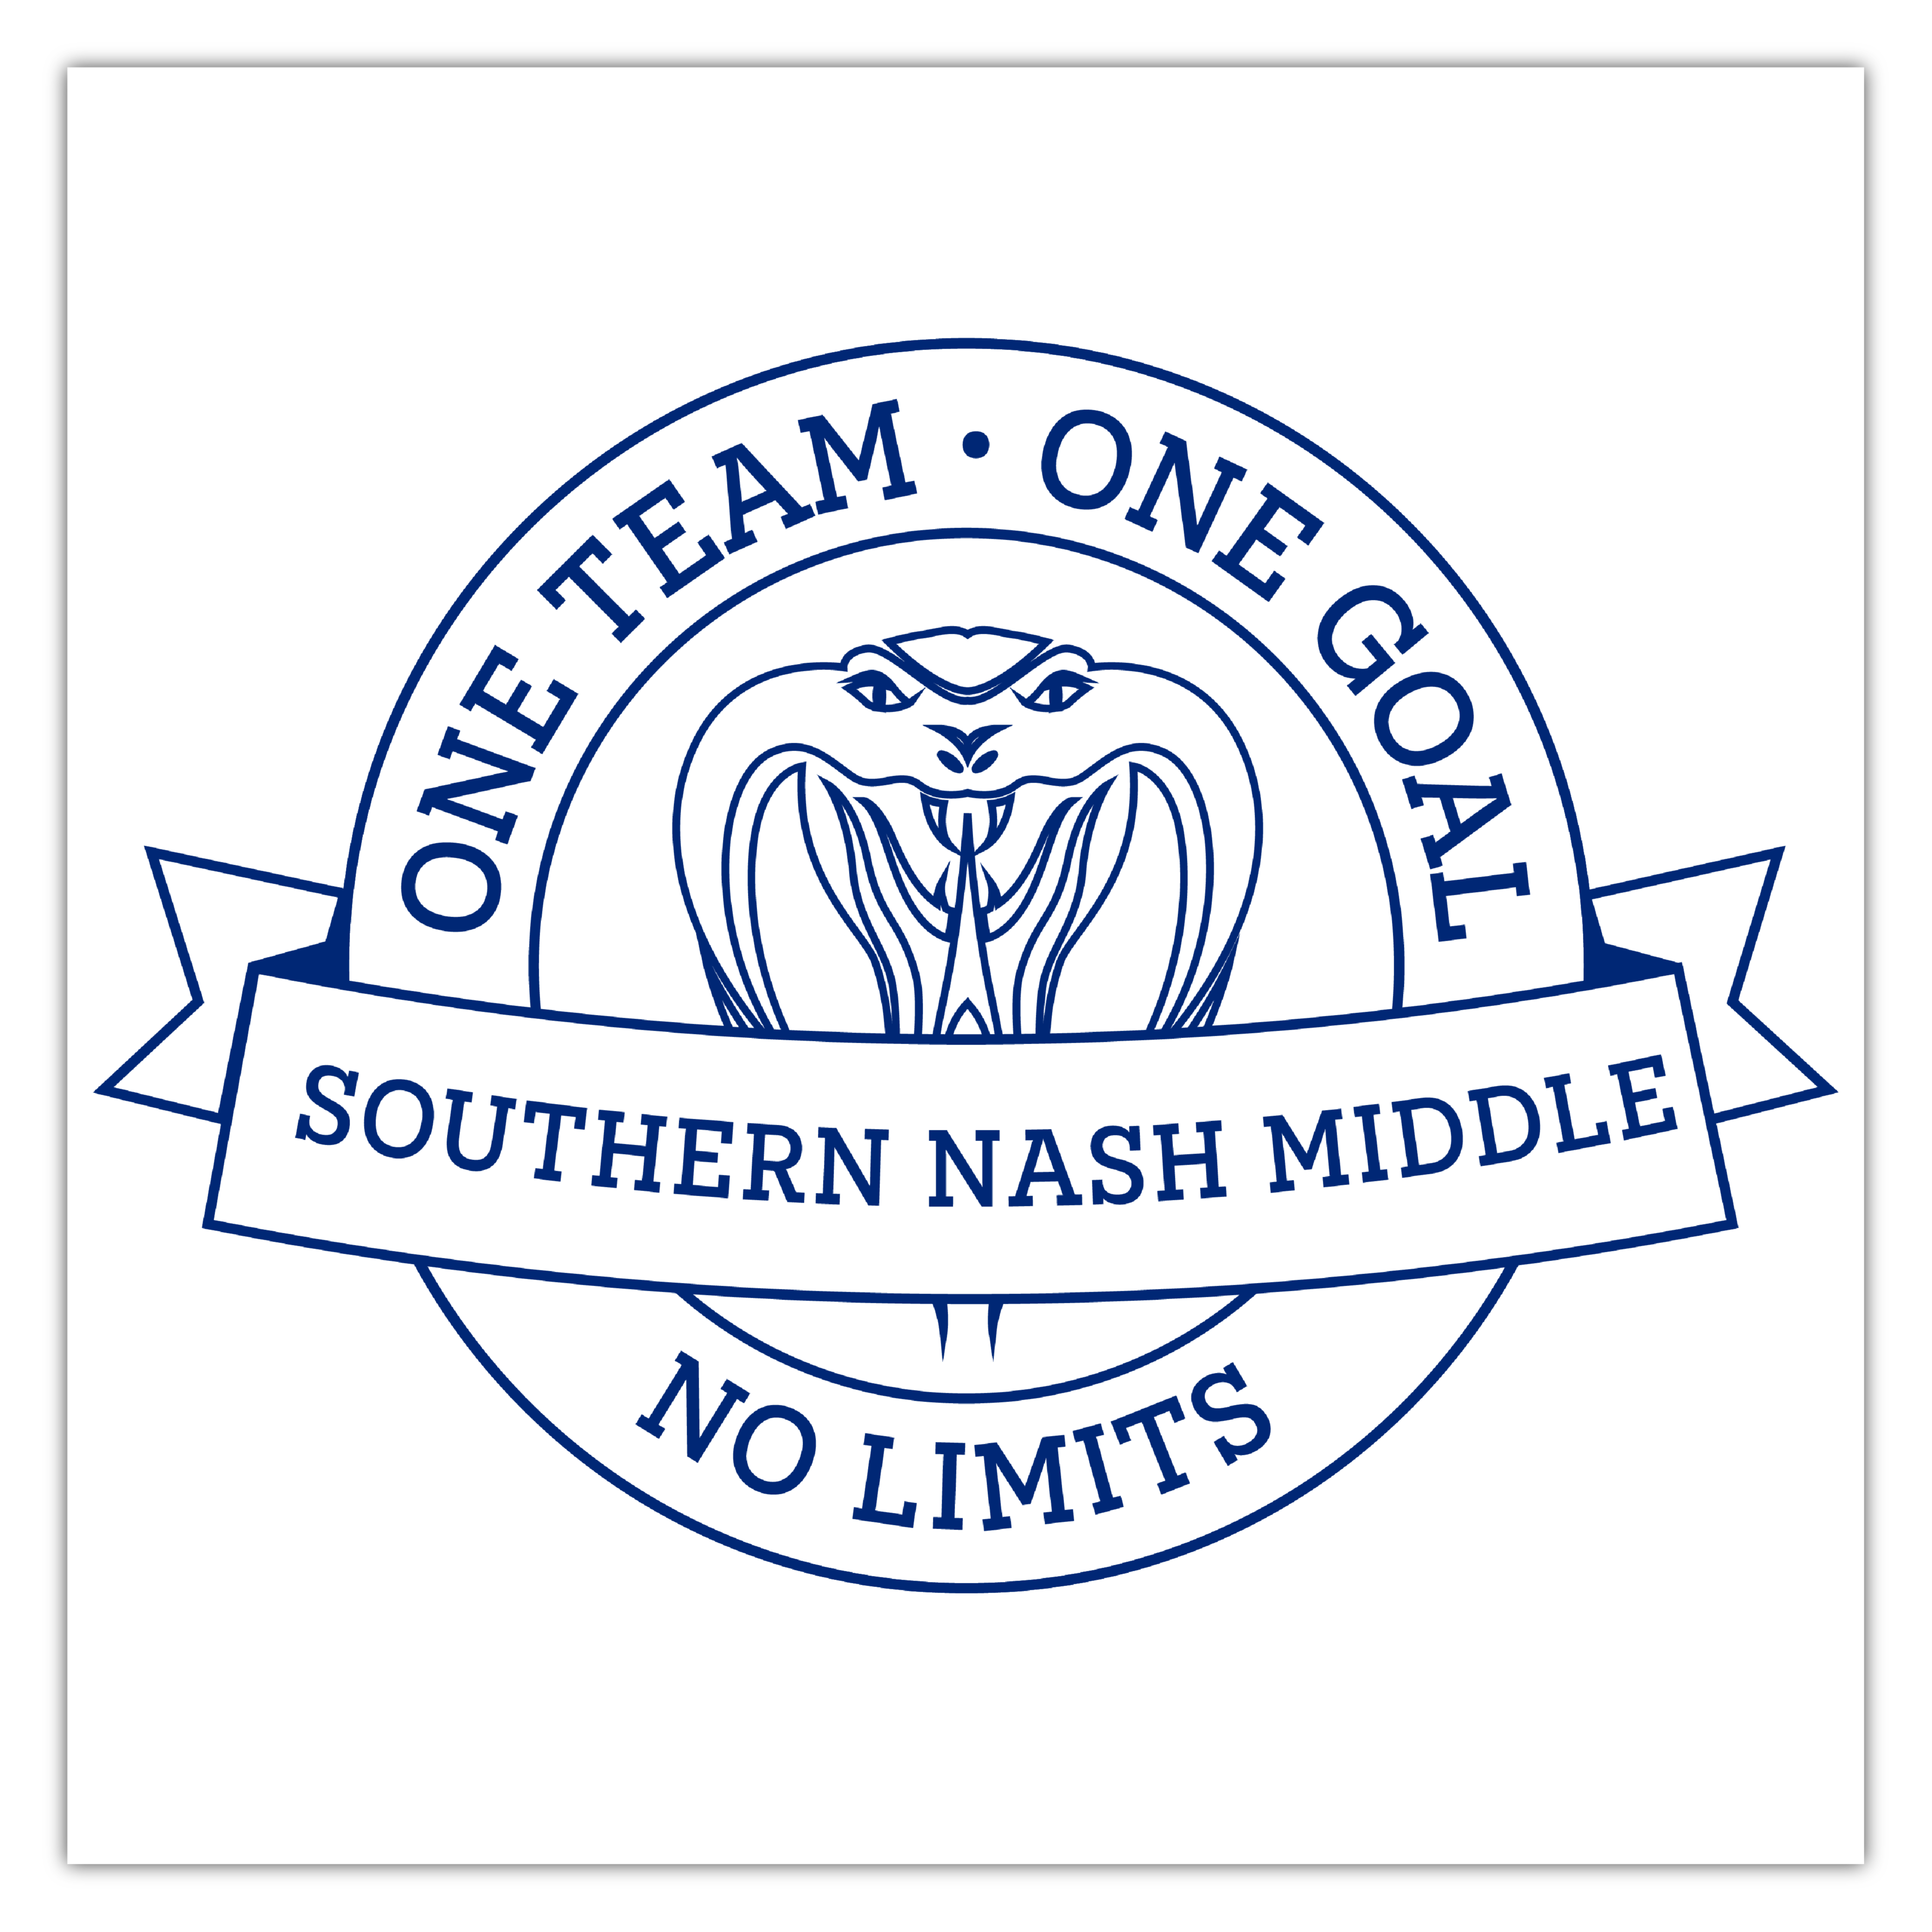 Southern Nash Middle logo